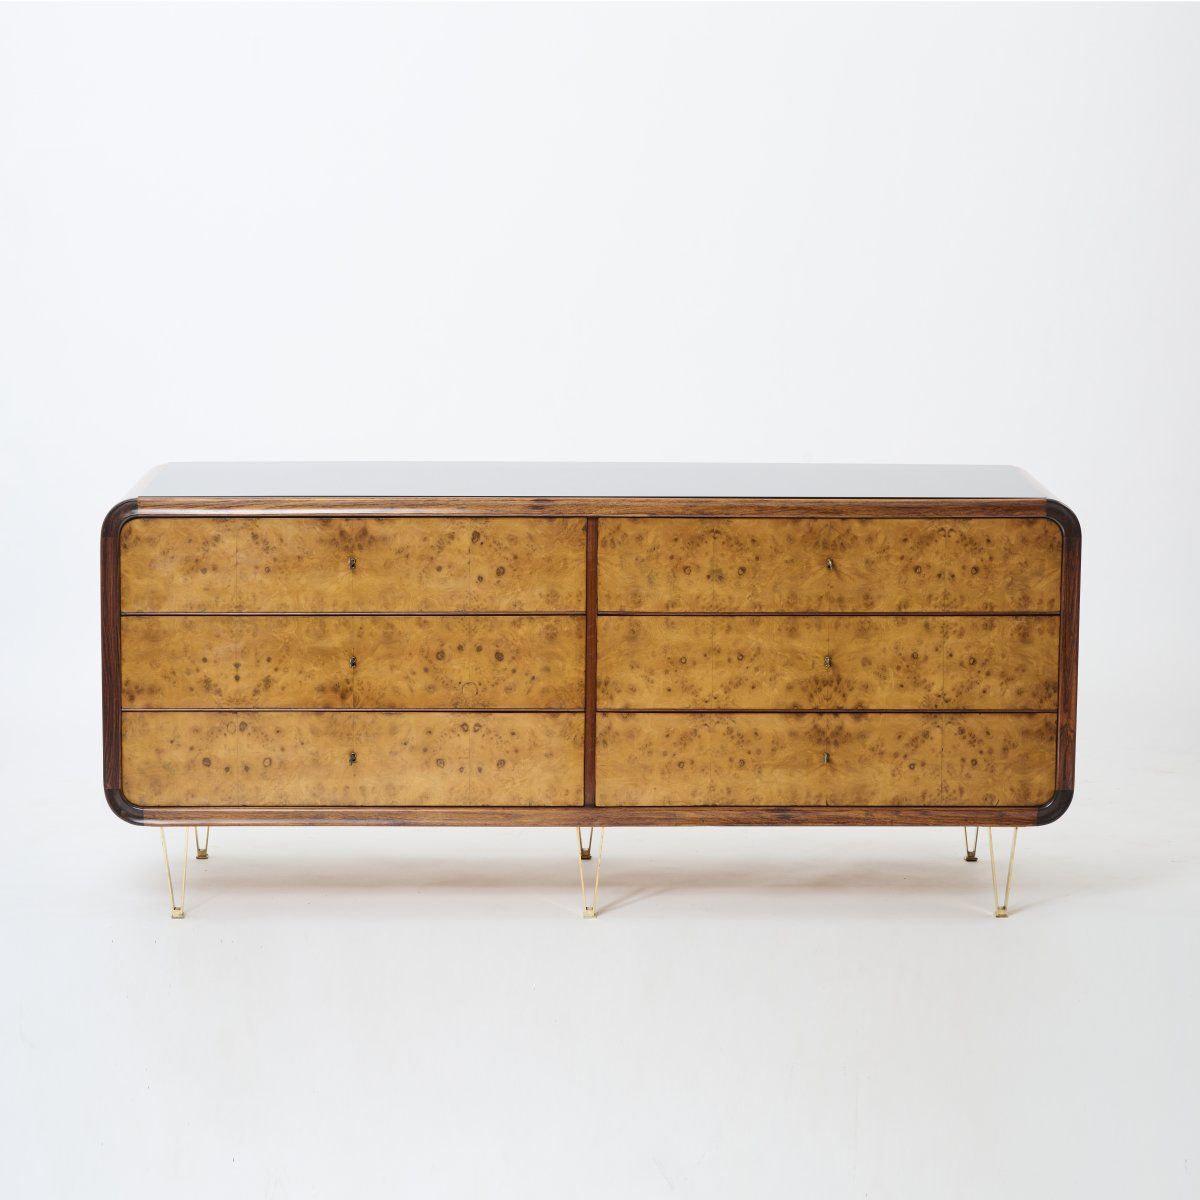 Italien Cabinet / sideboard, 1950s
H. 88 x 200 x 61 cm. 
Wooden box construction&hellip;